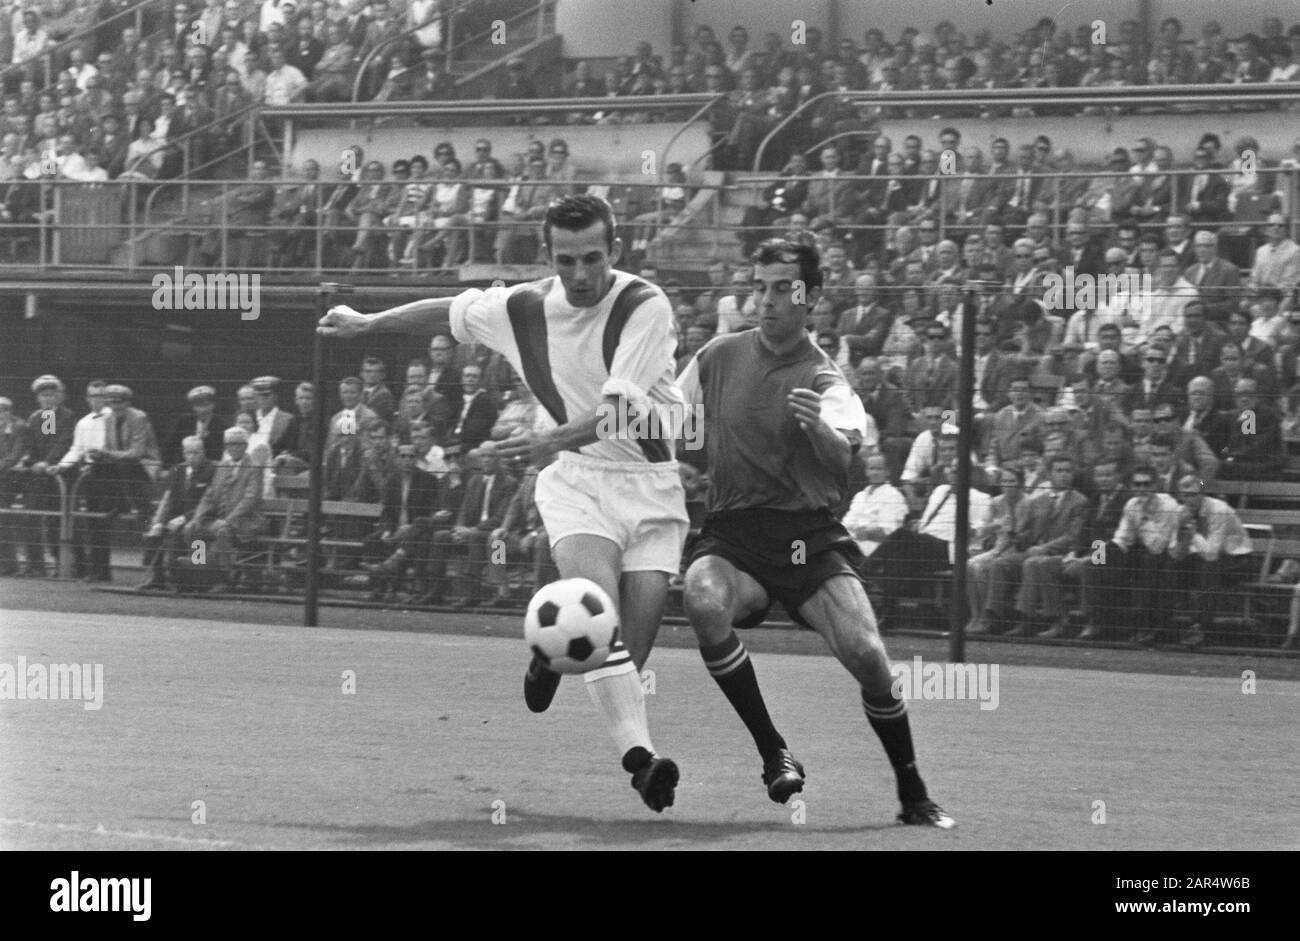 Feyenoord vs SVV 6-0, Coen Moulijn (r) en Langhorst, action Date: September 14, 1969 Location: Rotterdam Keywords: sport, football Personname: Moulijn, Coen Institution name: Feyenoord Stock Photo